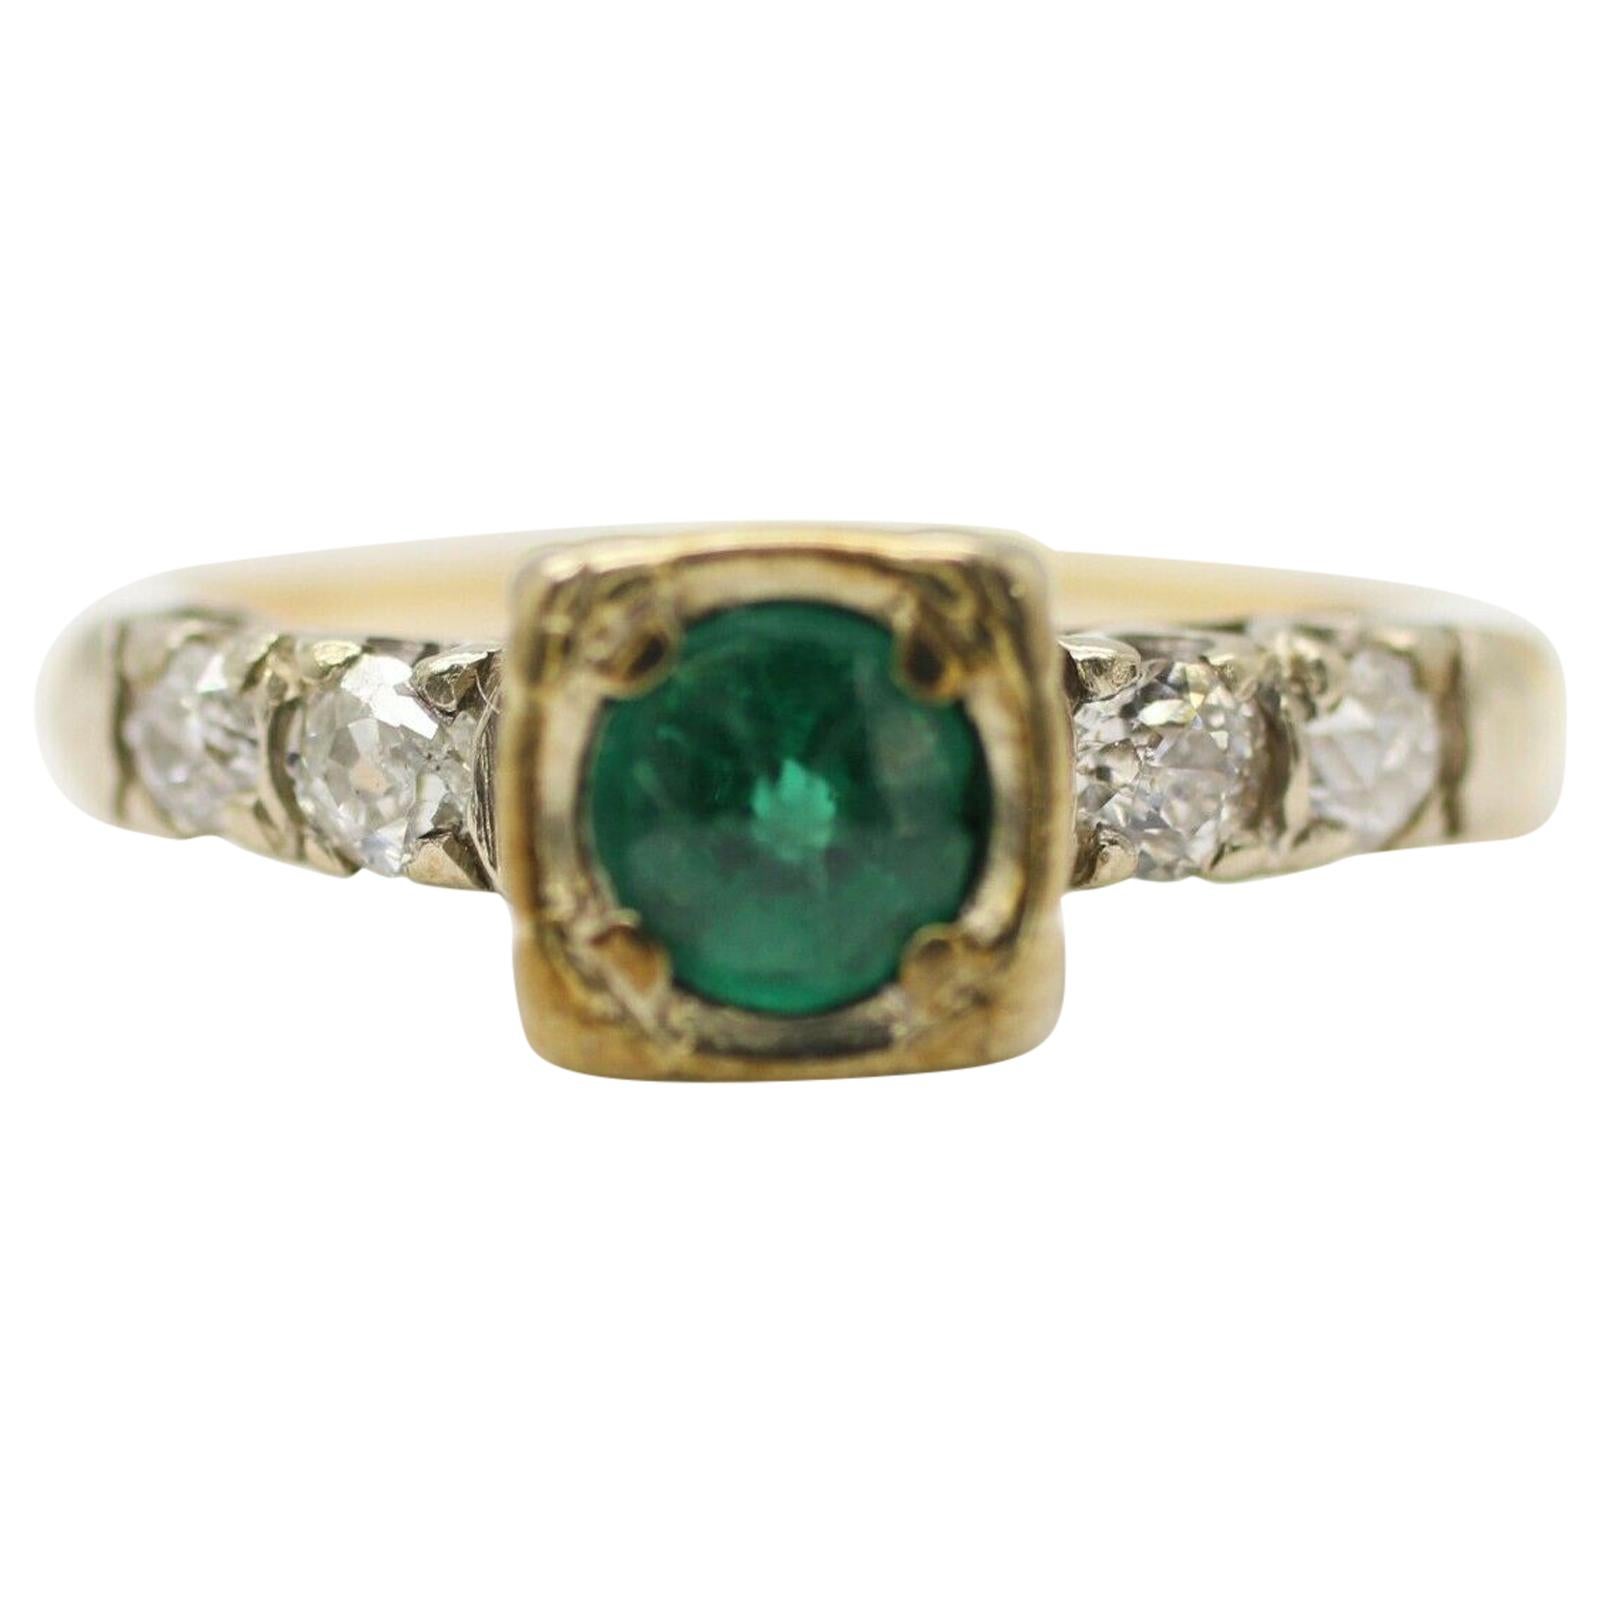 14 Karat Yellow Gold Emerald and Diamond Ring Containing